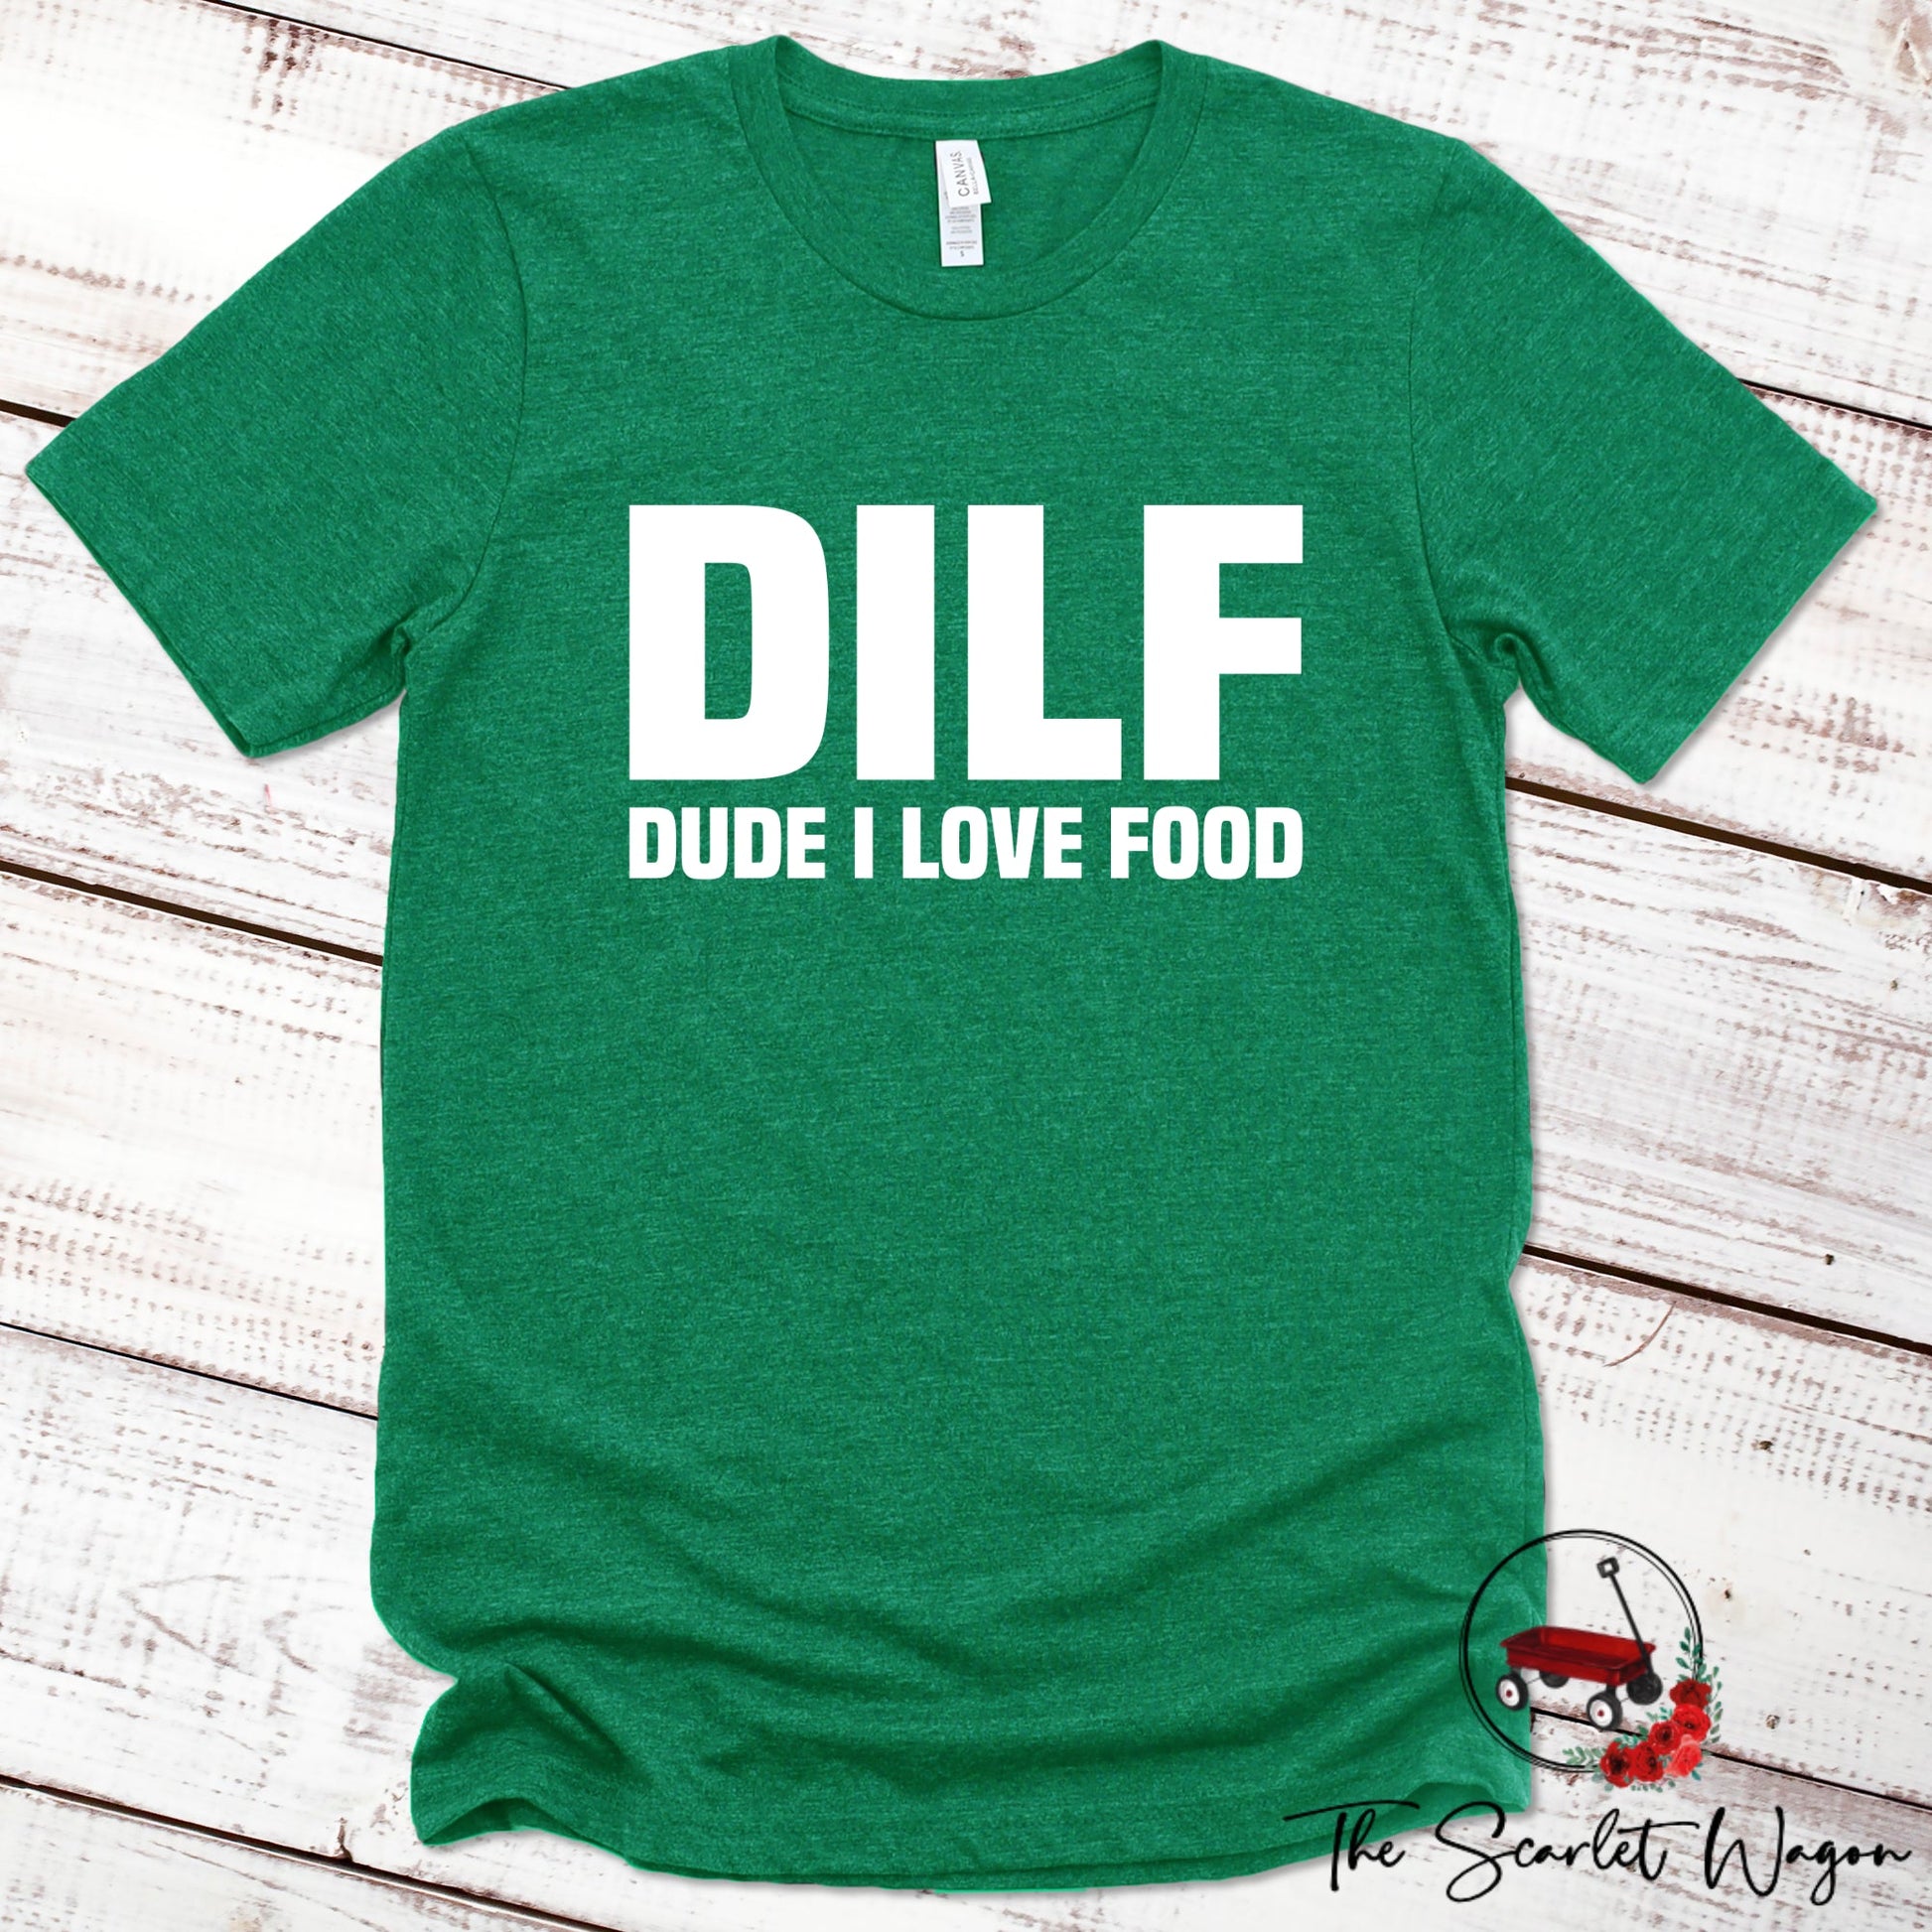 DILF - Dude I Love Food Premium Tee Scarlet Wagon Heather Green XS 